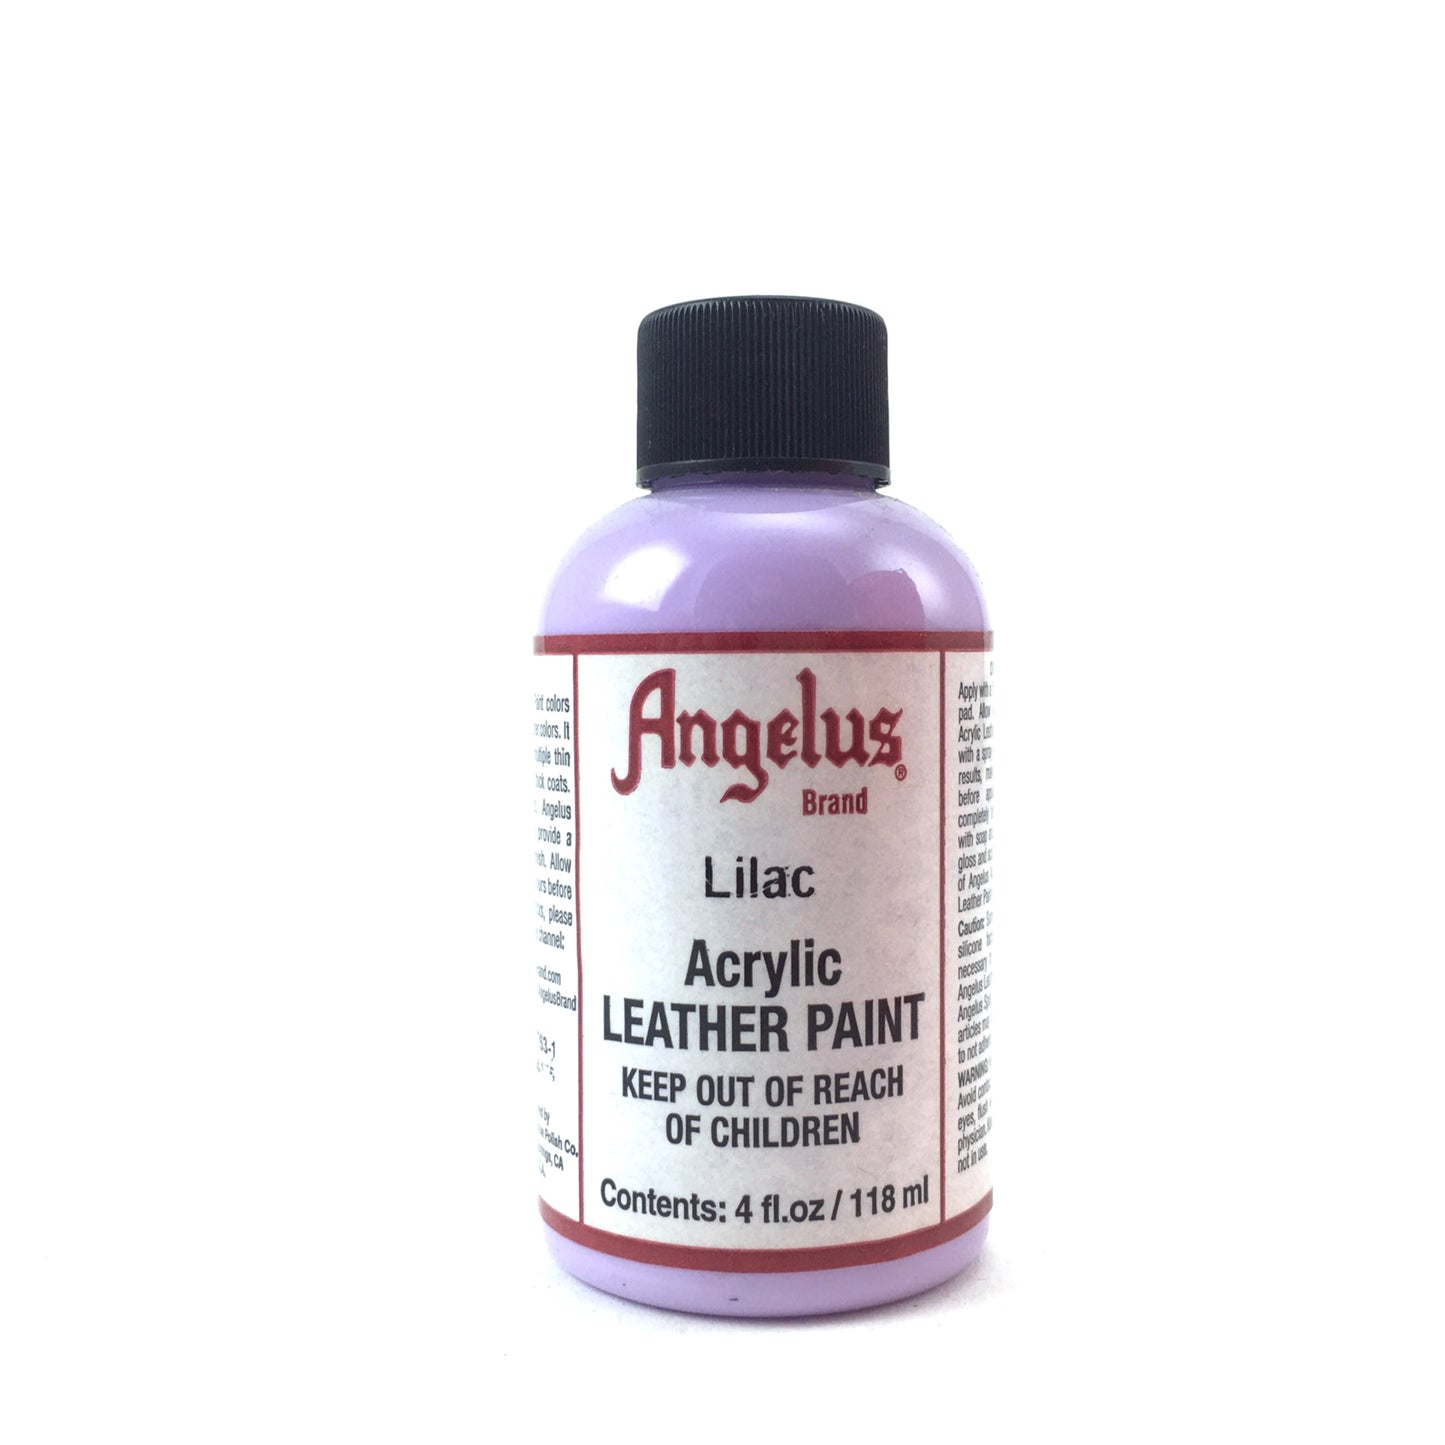 Angelus Acrylic Leather Paint - 4 oz. - Matte Lilac by Angelus - K. A. Artist Shop